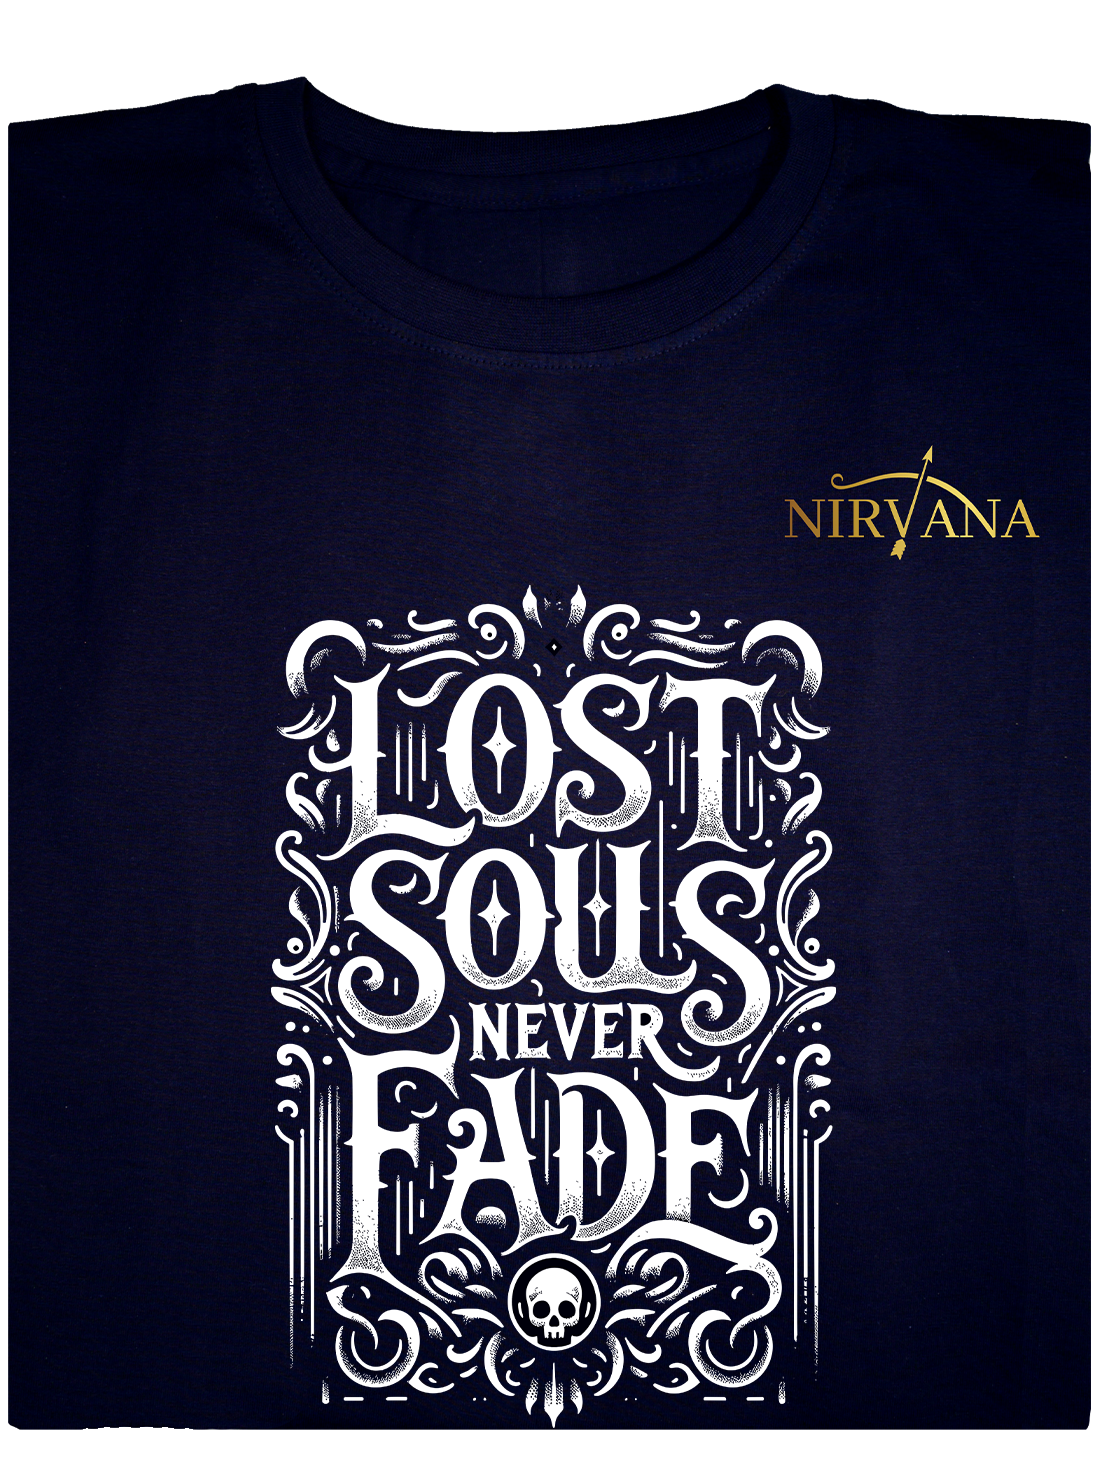 Lost Souls Never Fade